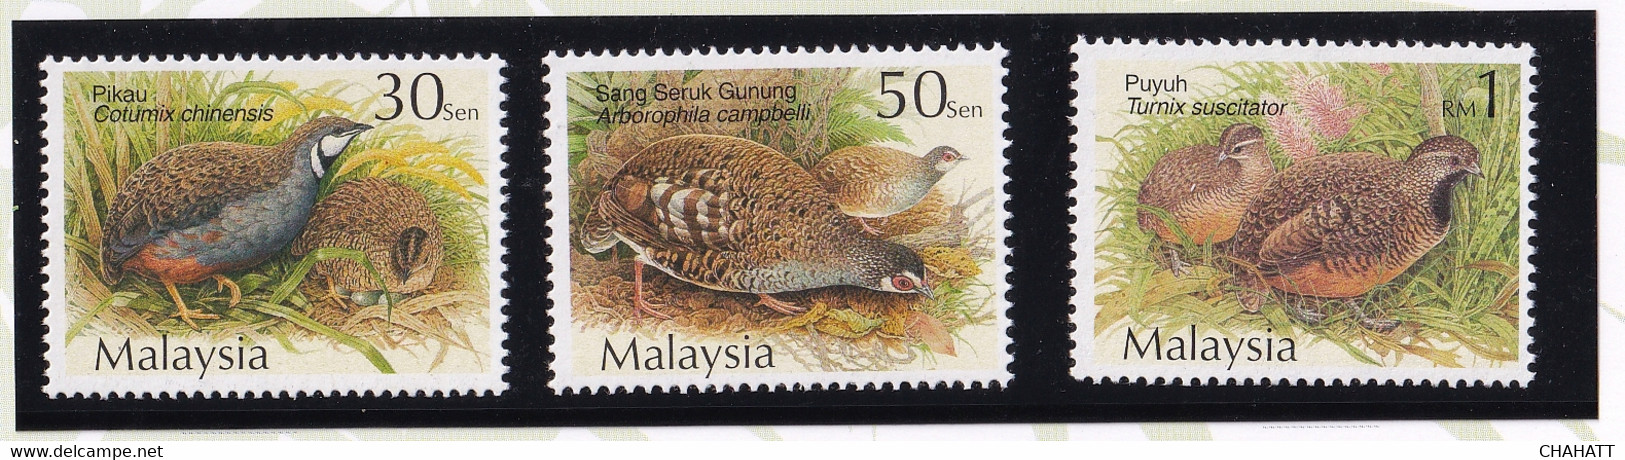 BIRDS-QUAILS & PARTRIDGES-PRESENTATION PACK-MALAYSIA-2001-SCARCE-FC2-104 - Grey Partridge